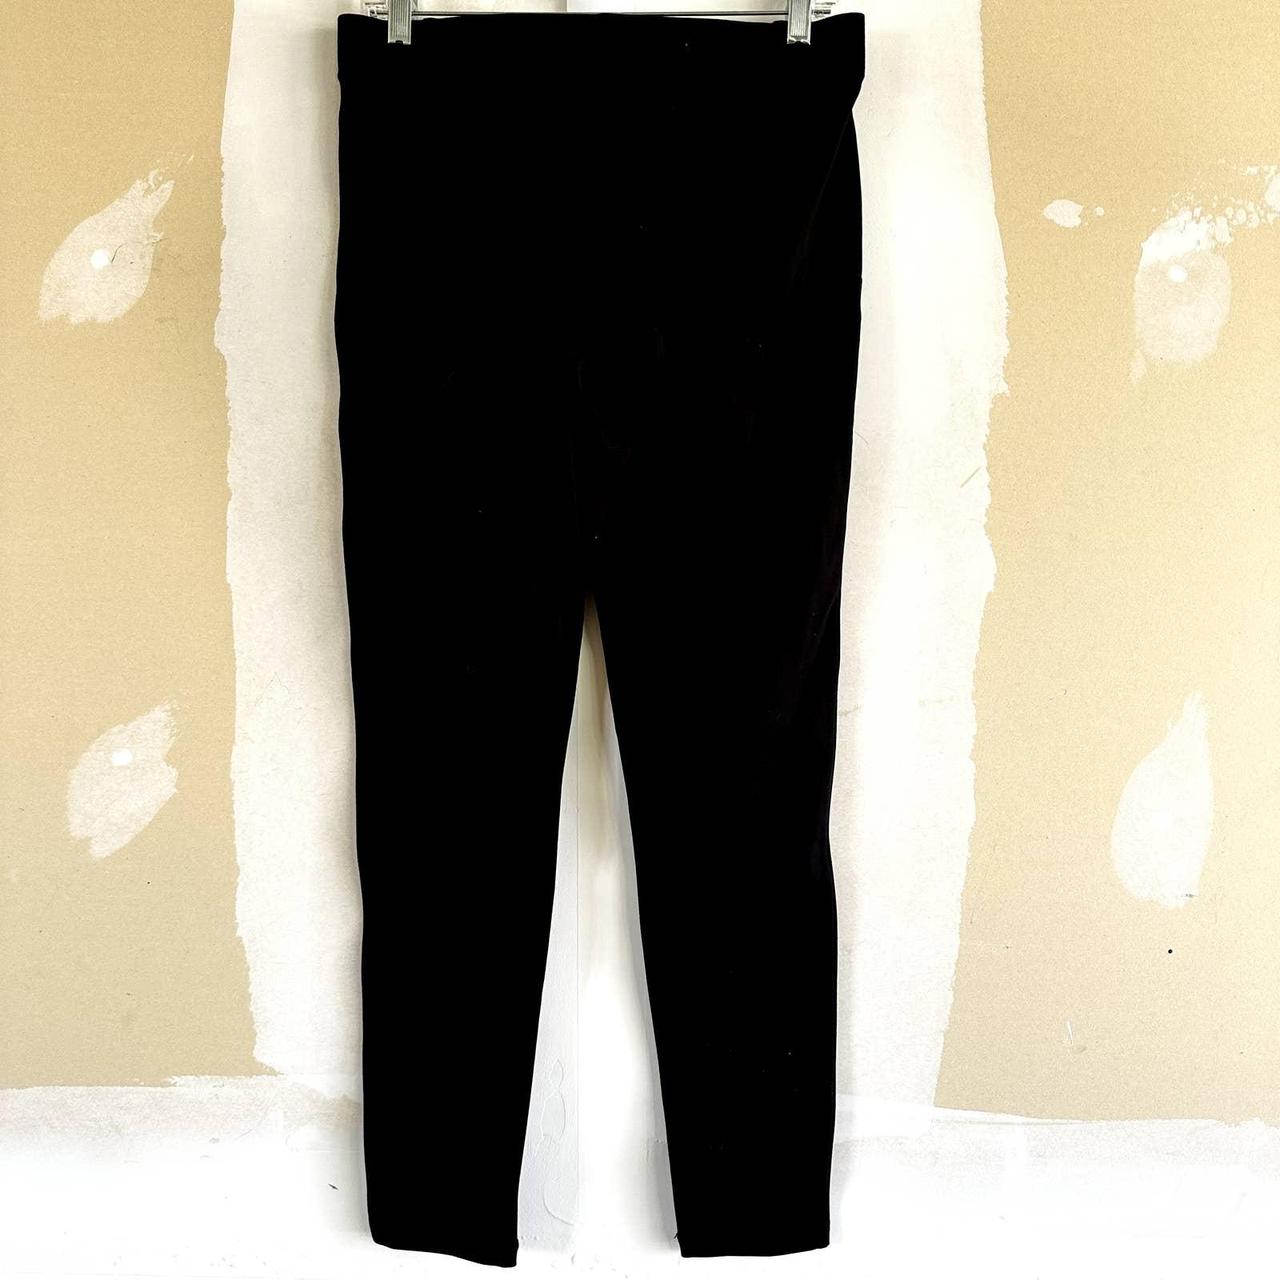 Betabrand Skinny-Leg Classic Dress Yoga Pants Navy - Depop